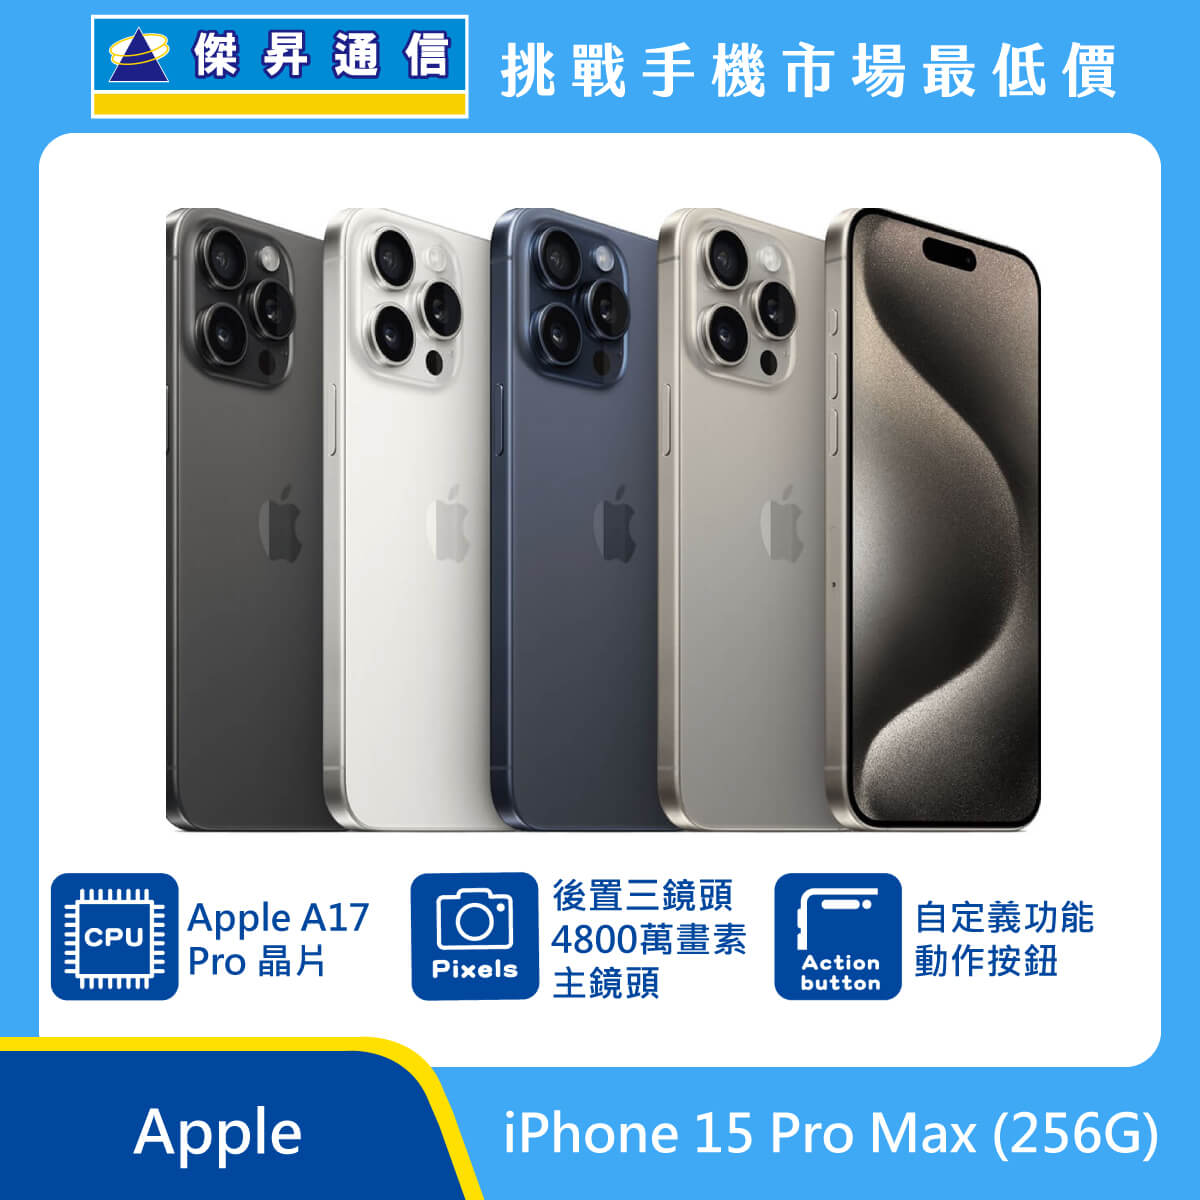 Apple iPhone 15 Pro Max (256G) [藍/白/灰]